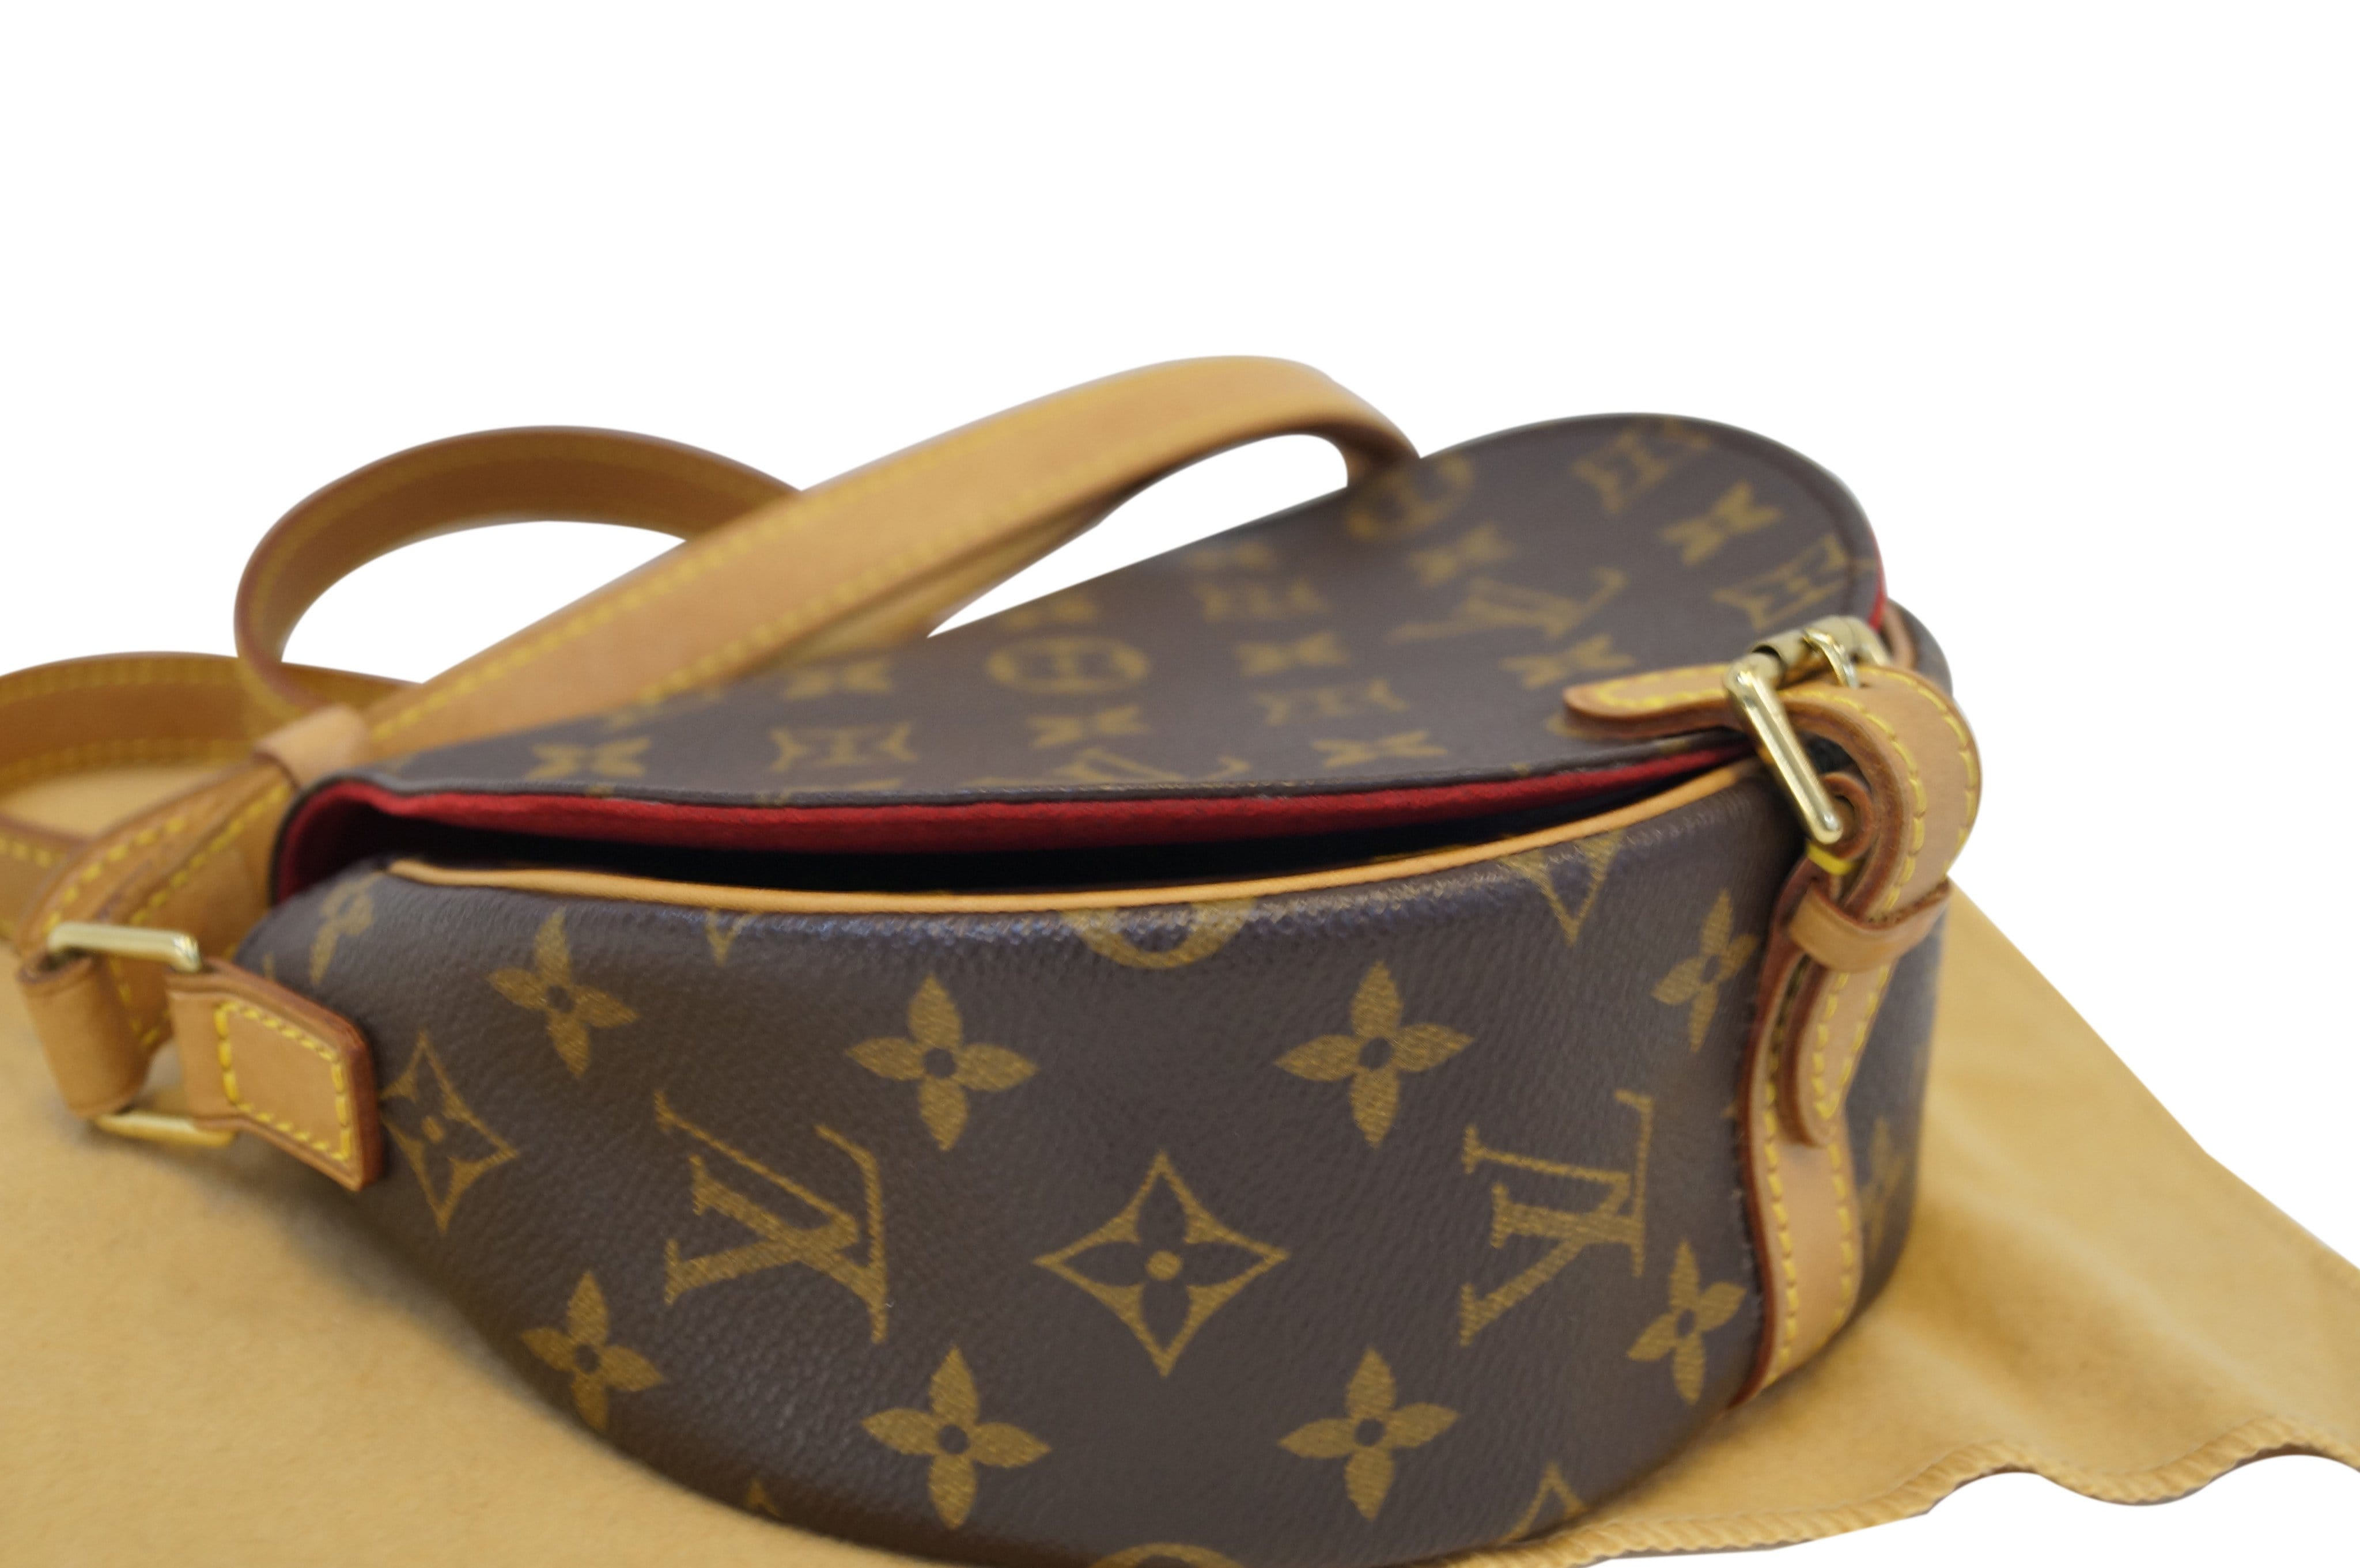 Louis Vuitton – Tambourine Monogram Bag – Queen Station